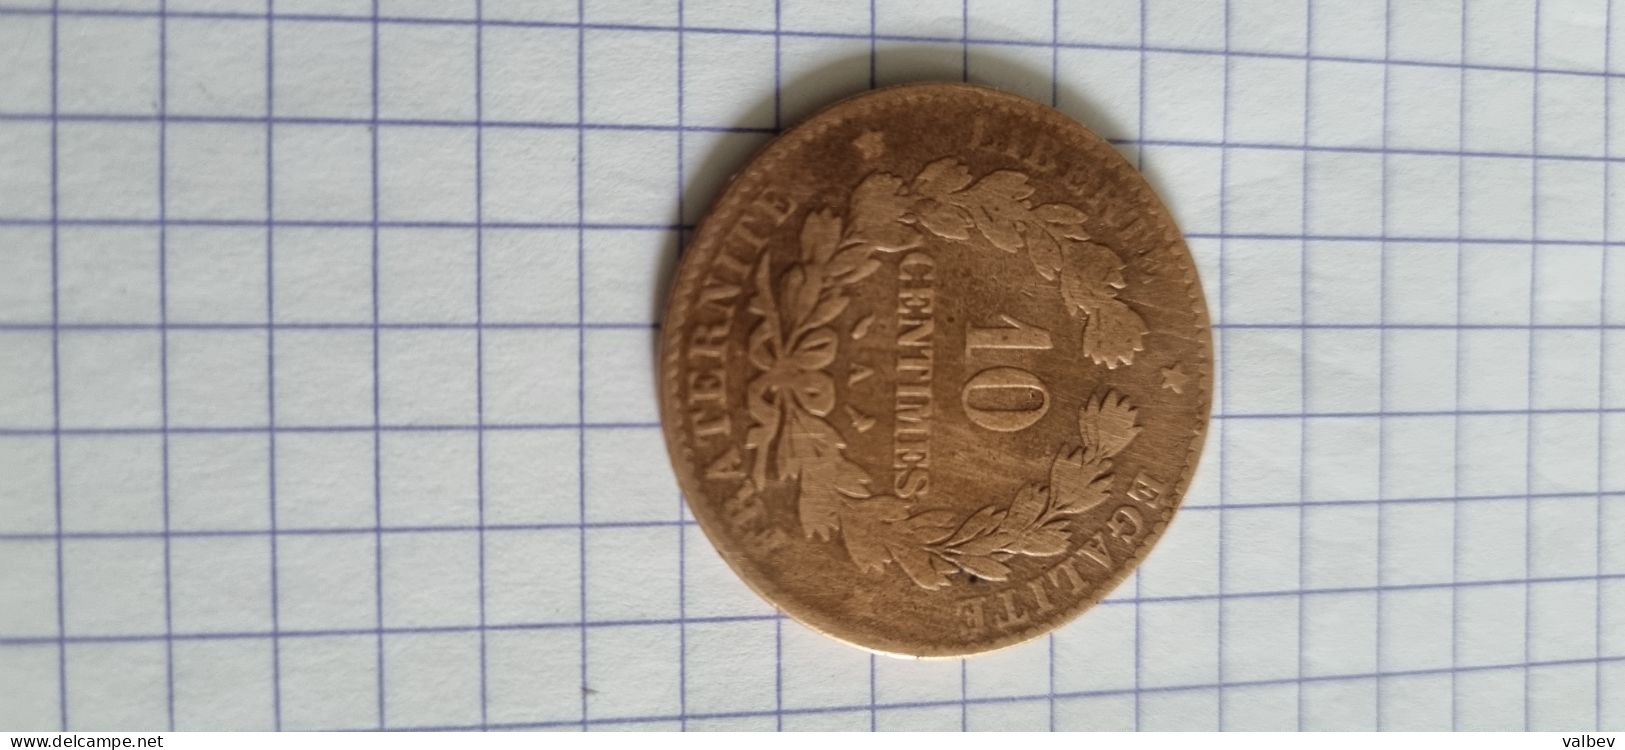 10 Centimes - RF - 1897 - 10 Centimes